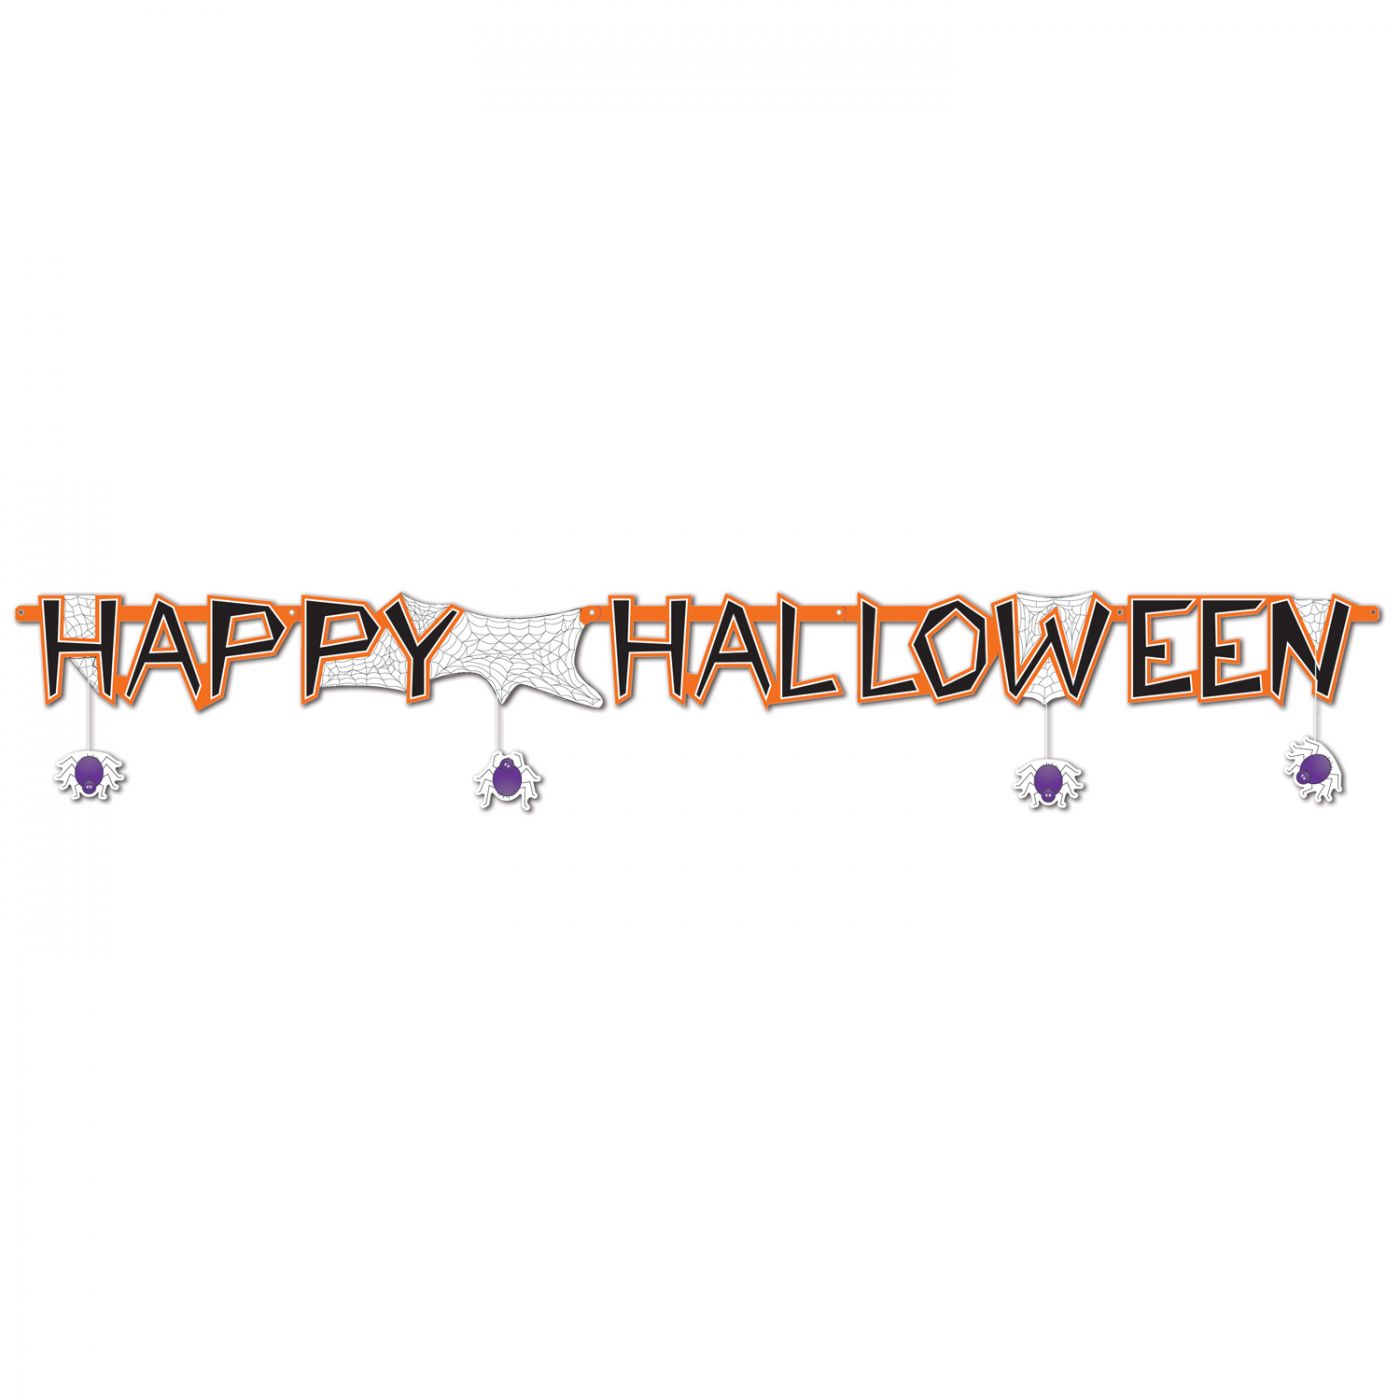 Happy Halloween Streamer image